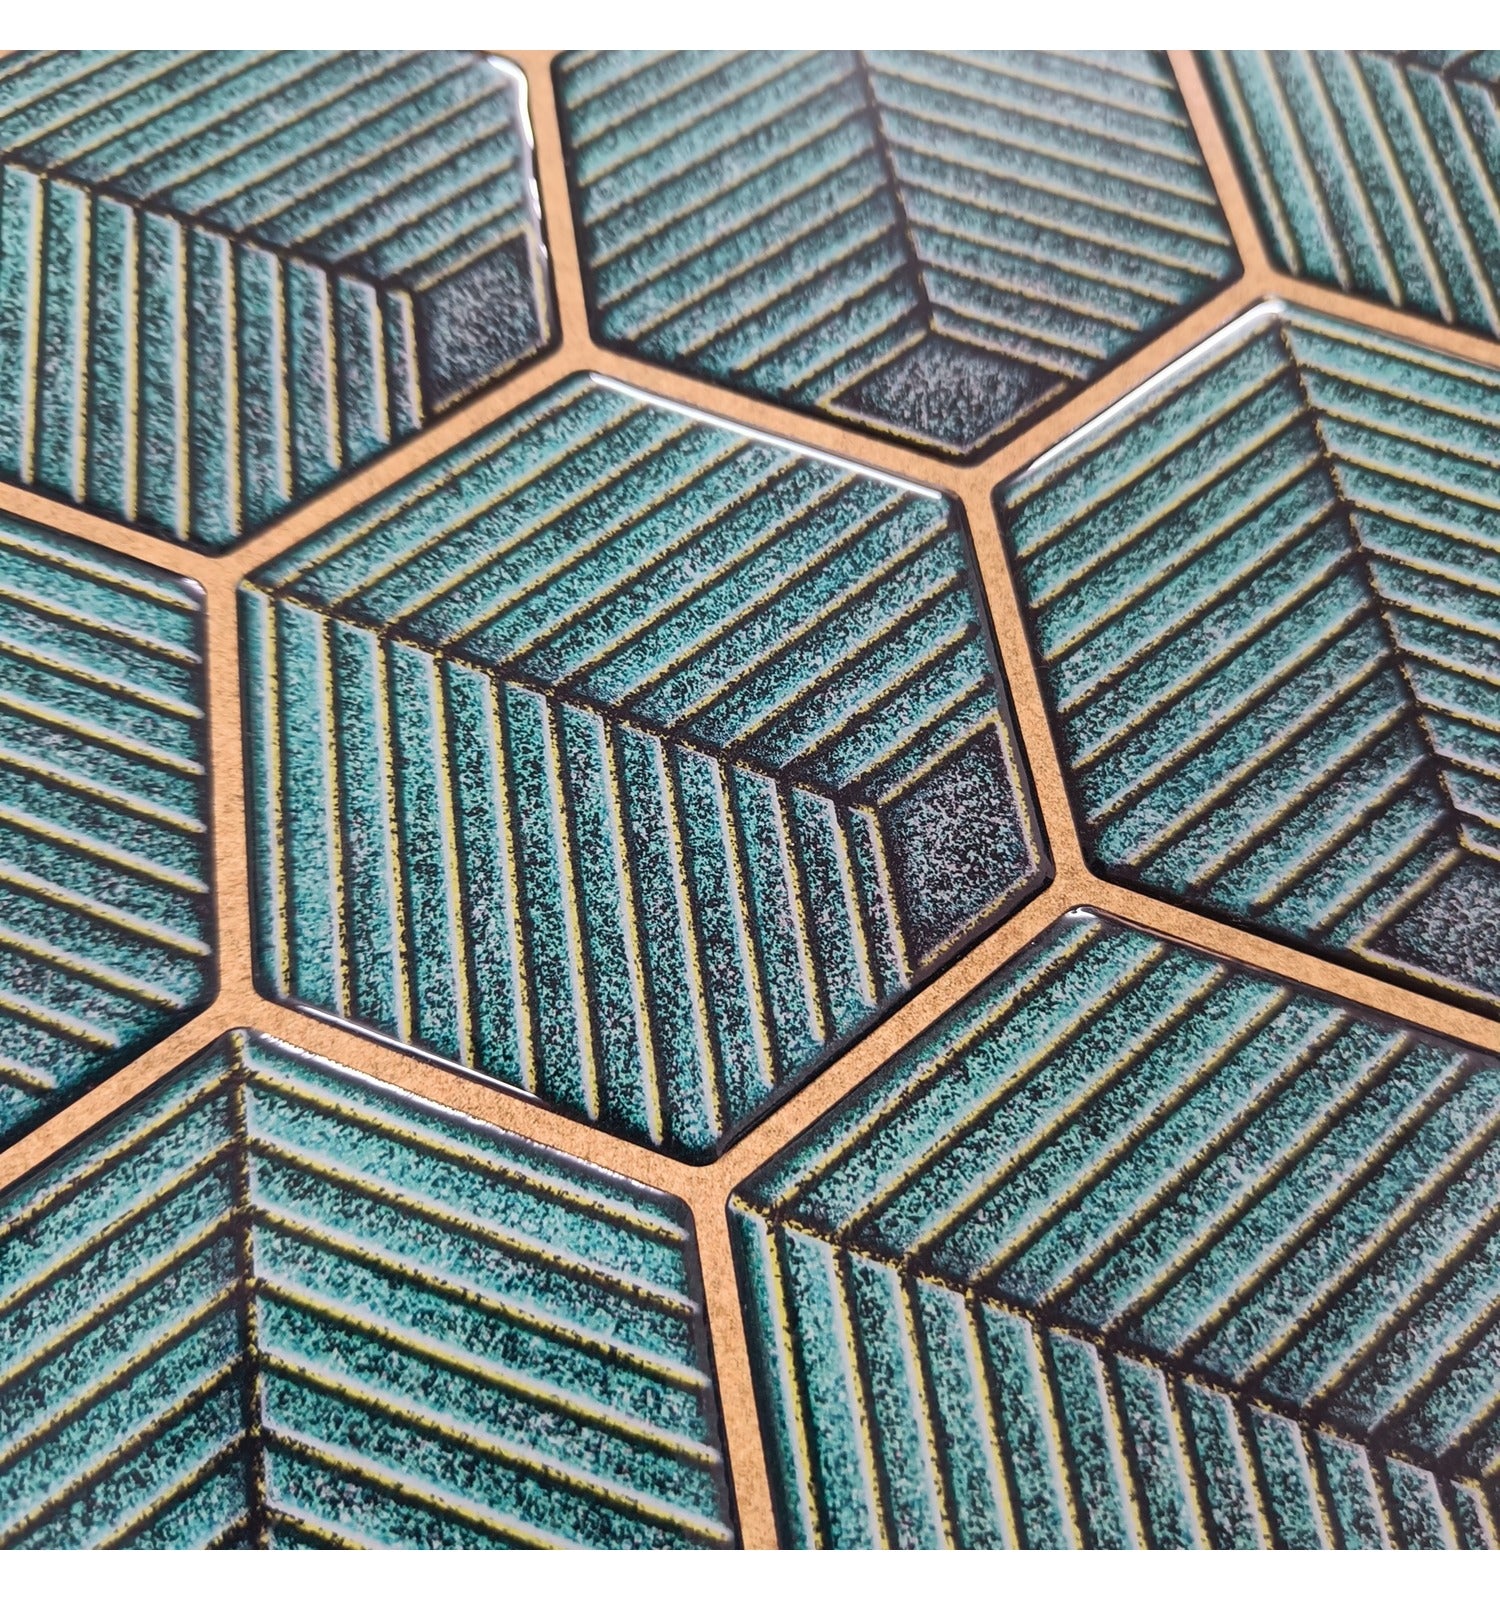 Sea Green Honeycomb Kitchen Decor Peel and Stick Backsplash Tiles